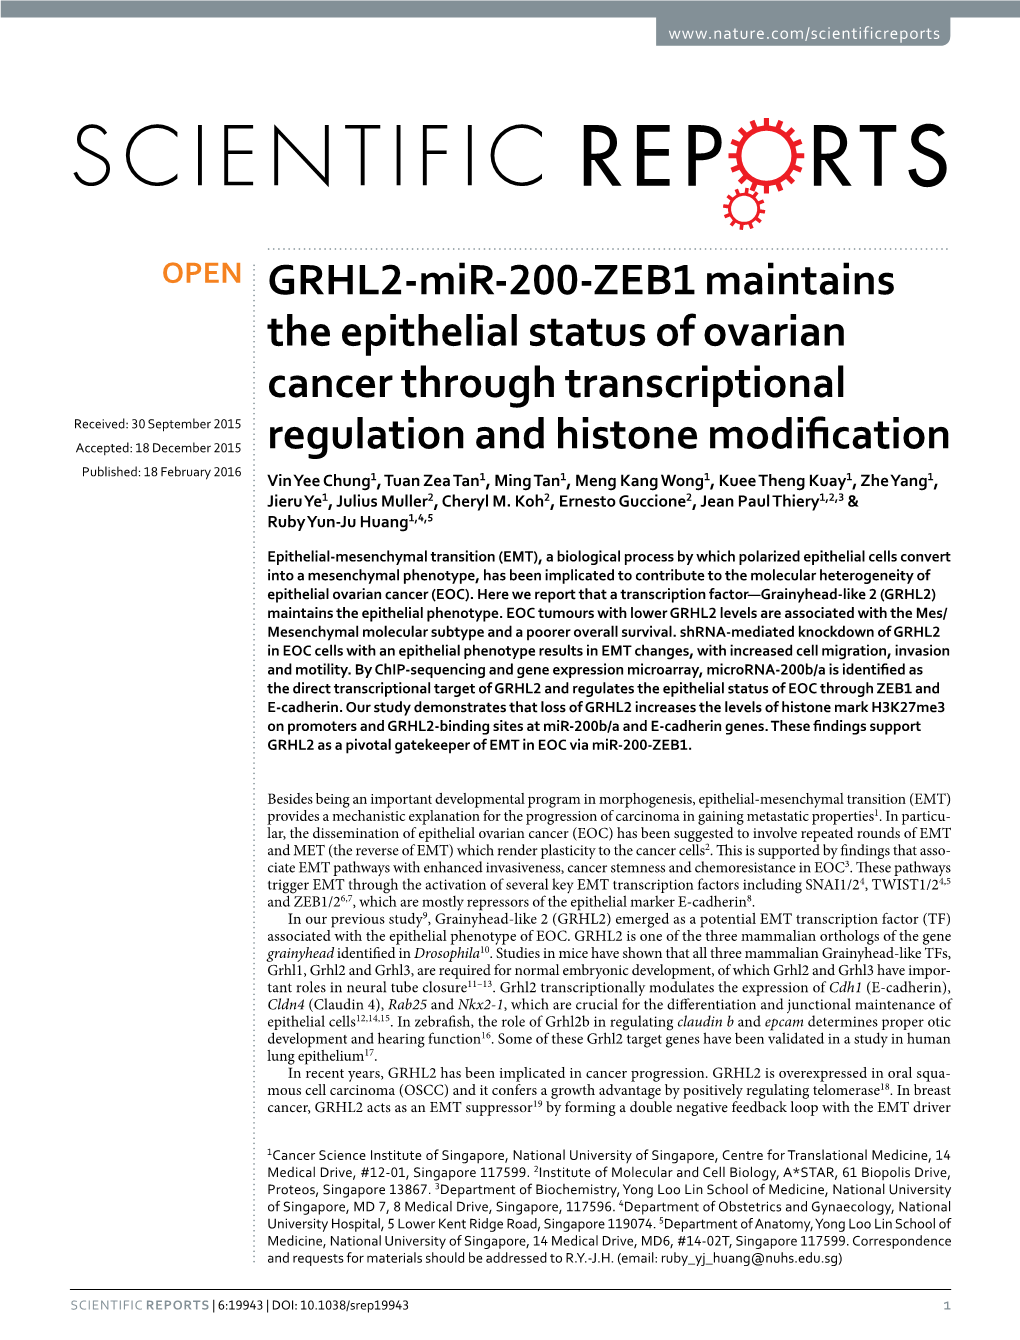 GRHL2-Mir-200-ZEB1 Maintains the Epithelial Status of Ovarian Cancer